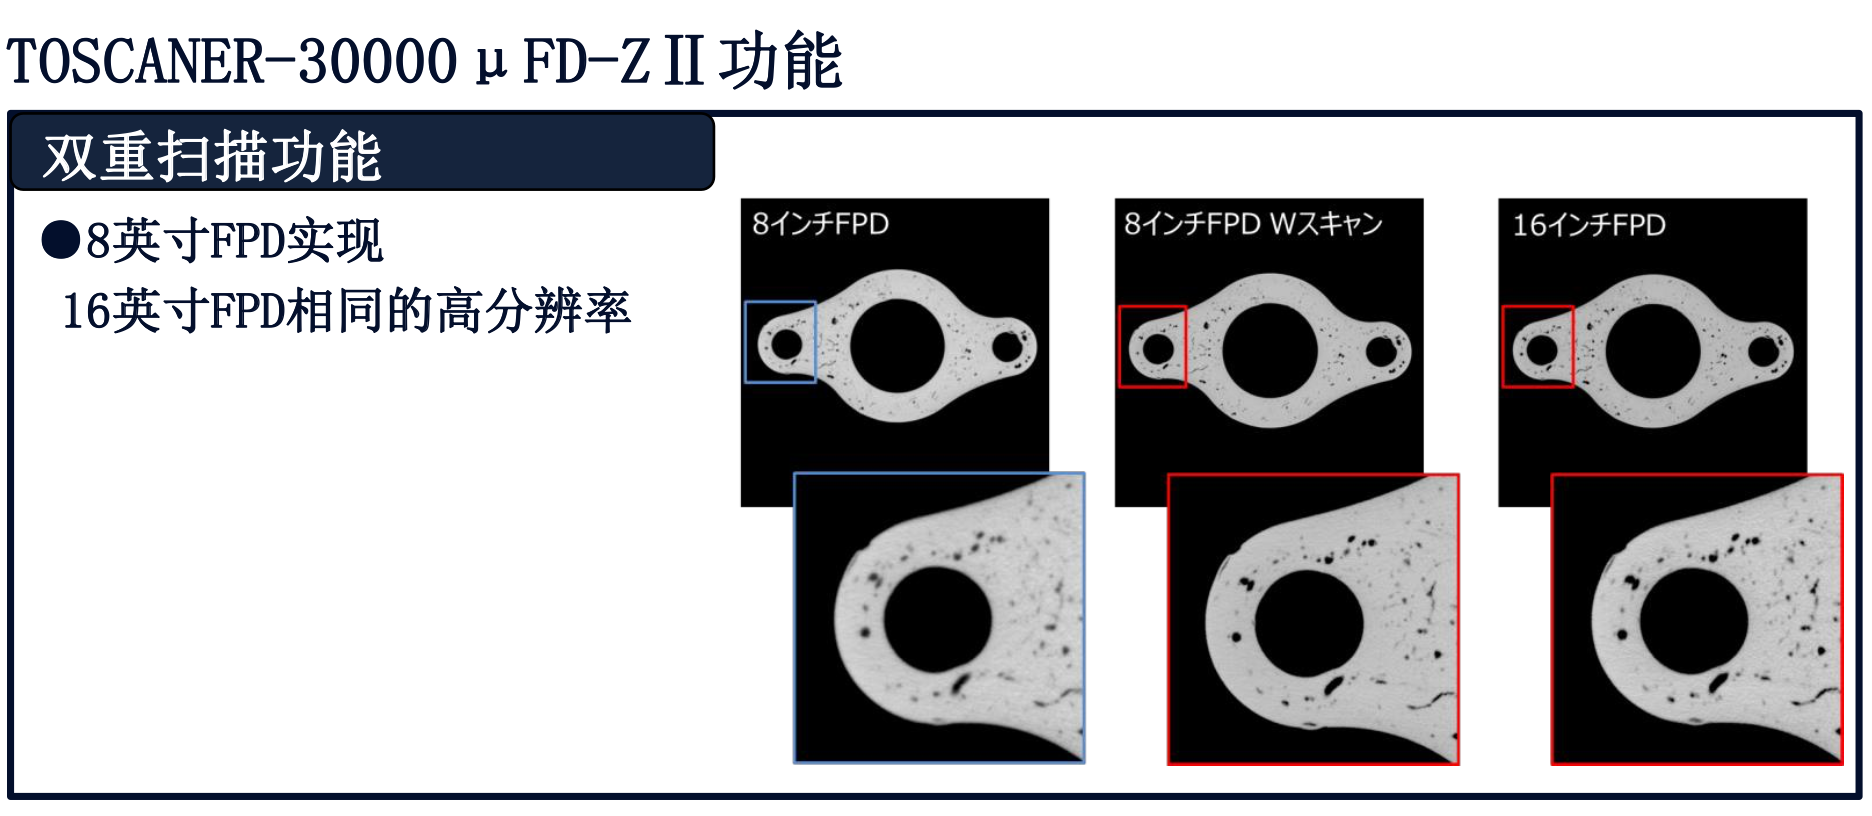 东芝产业用CT扫描装置 TOSCANER-30000μFD-ZII  (图1)